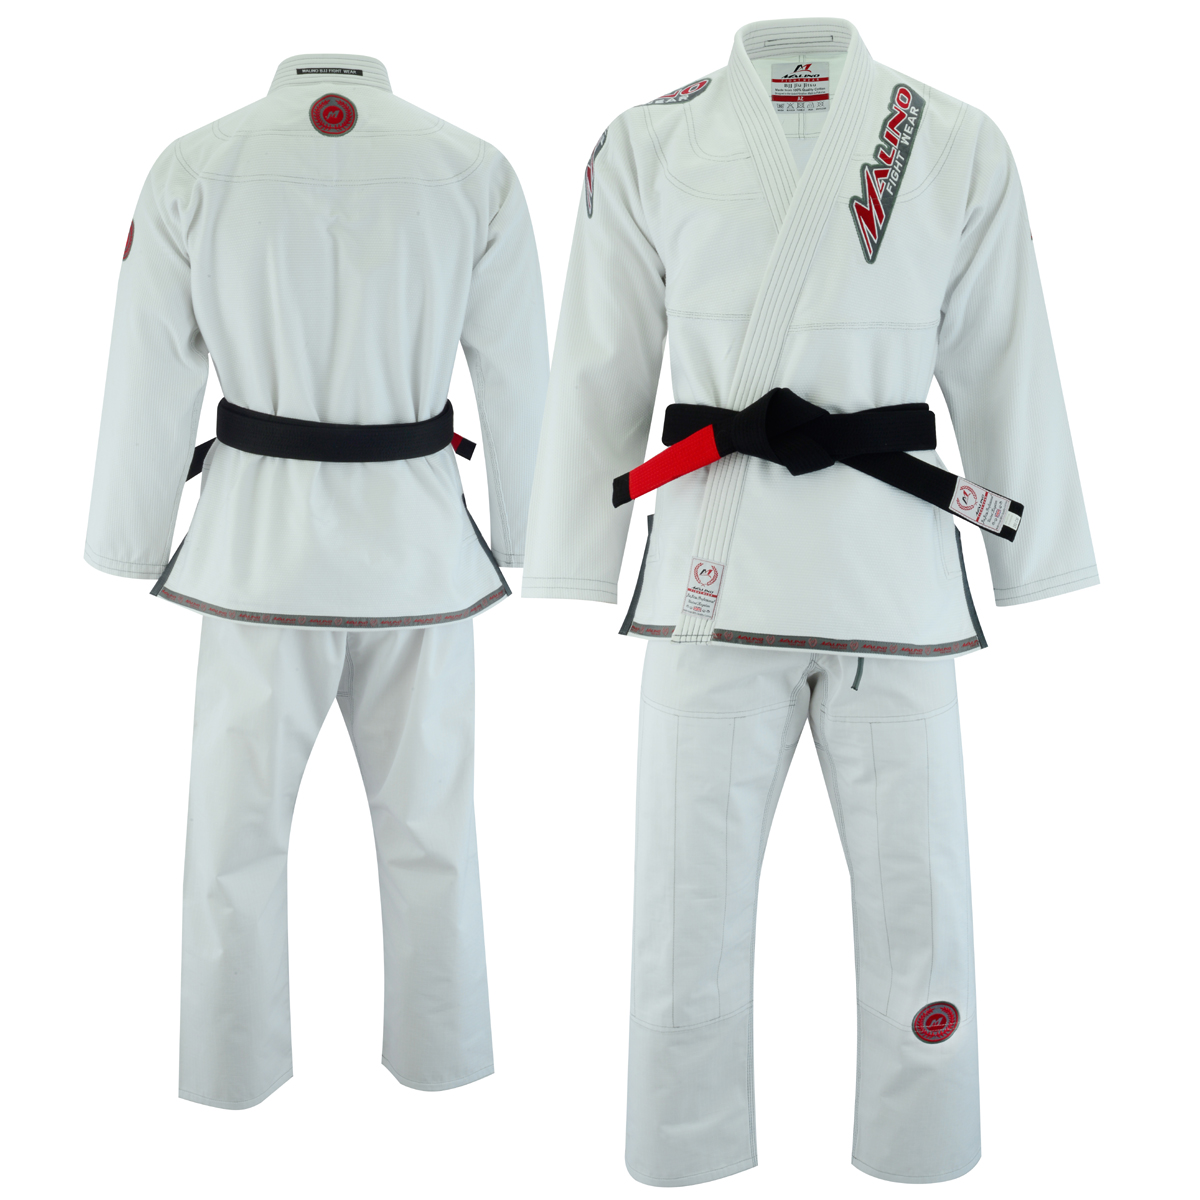 Beast Fighting Gear Brazilian Jiu Jitsu Gi Pearl Weave 100% Cotton 450GSM White Color with Free Wite Belt 